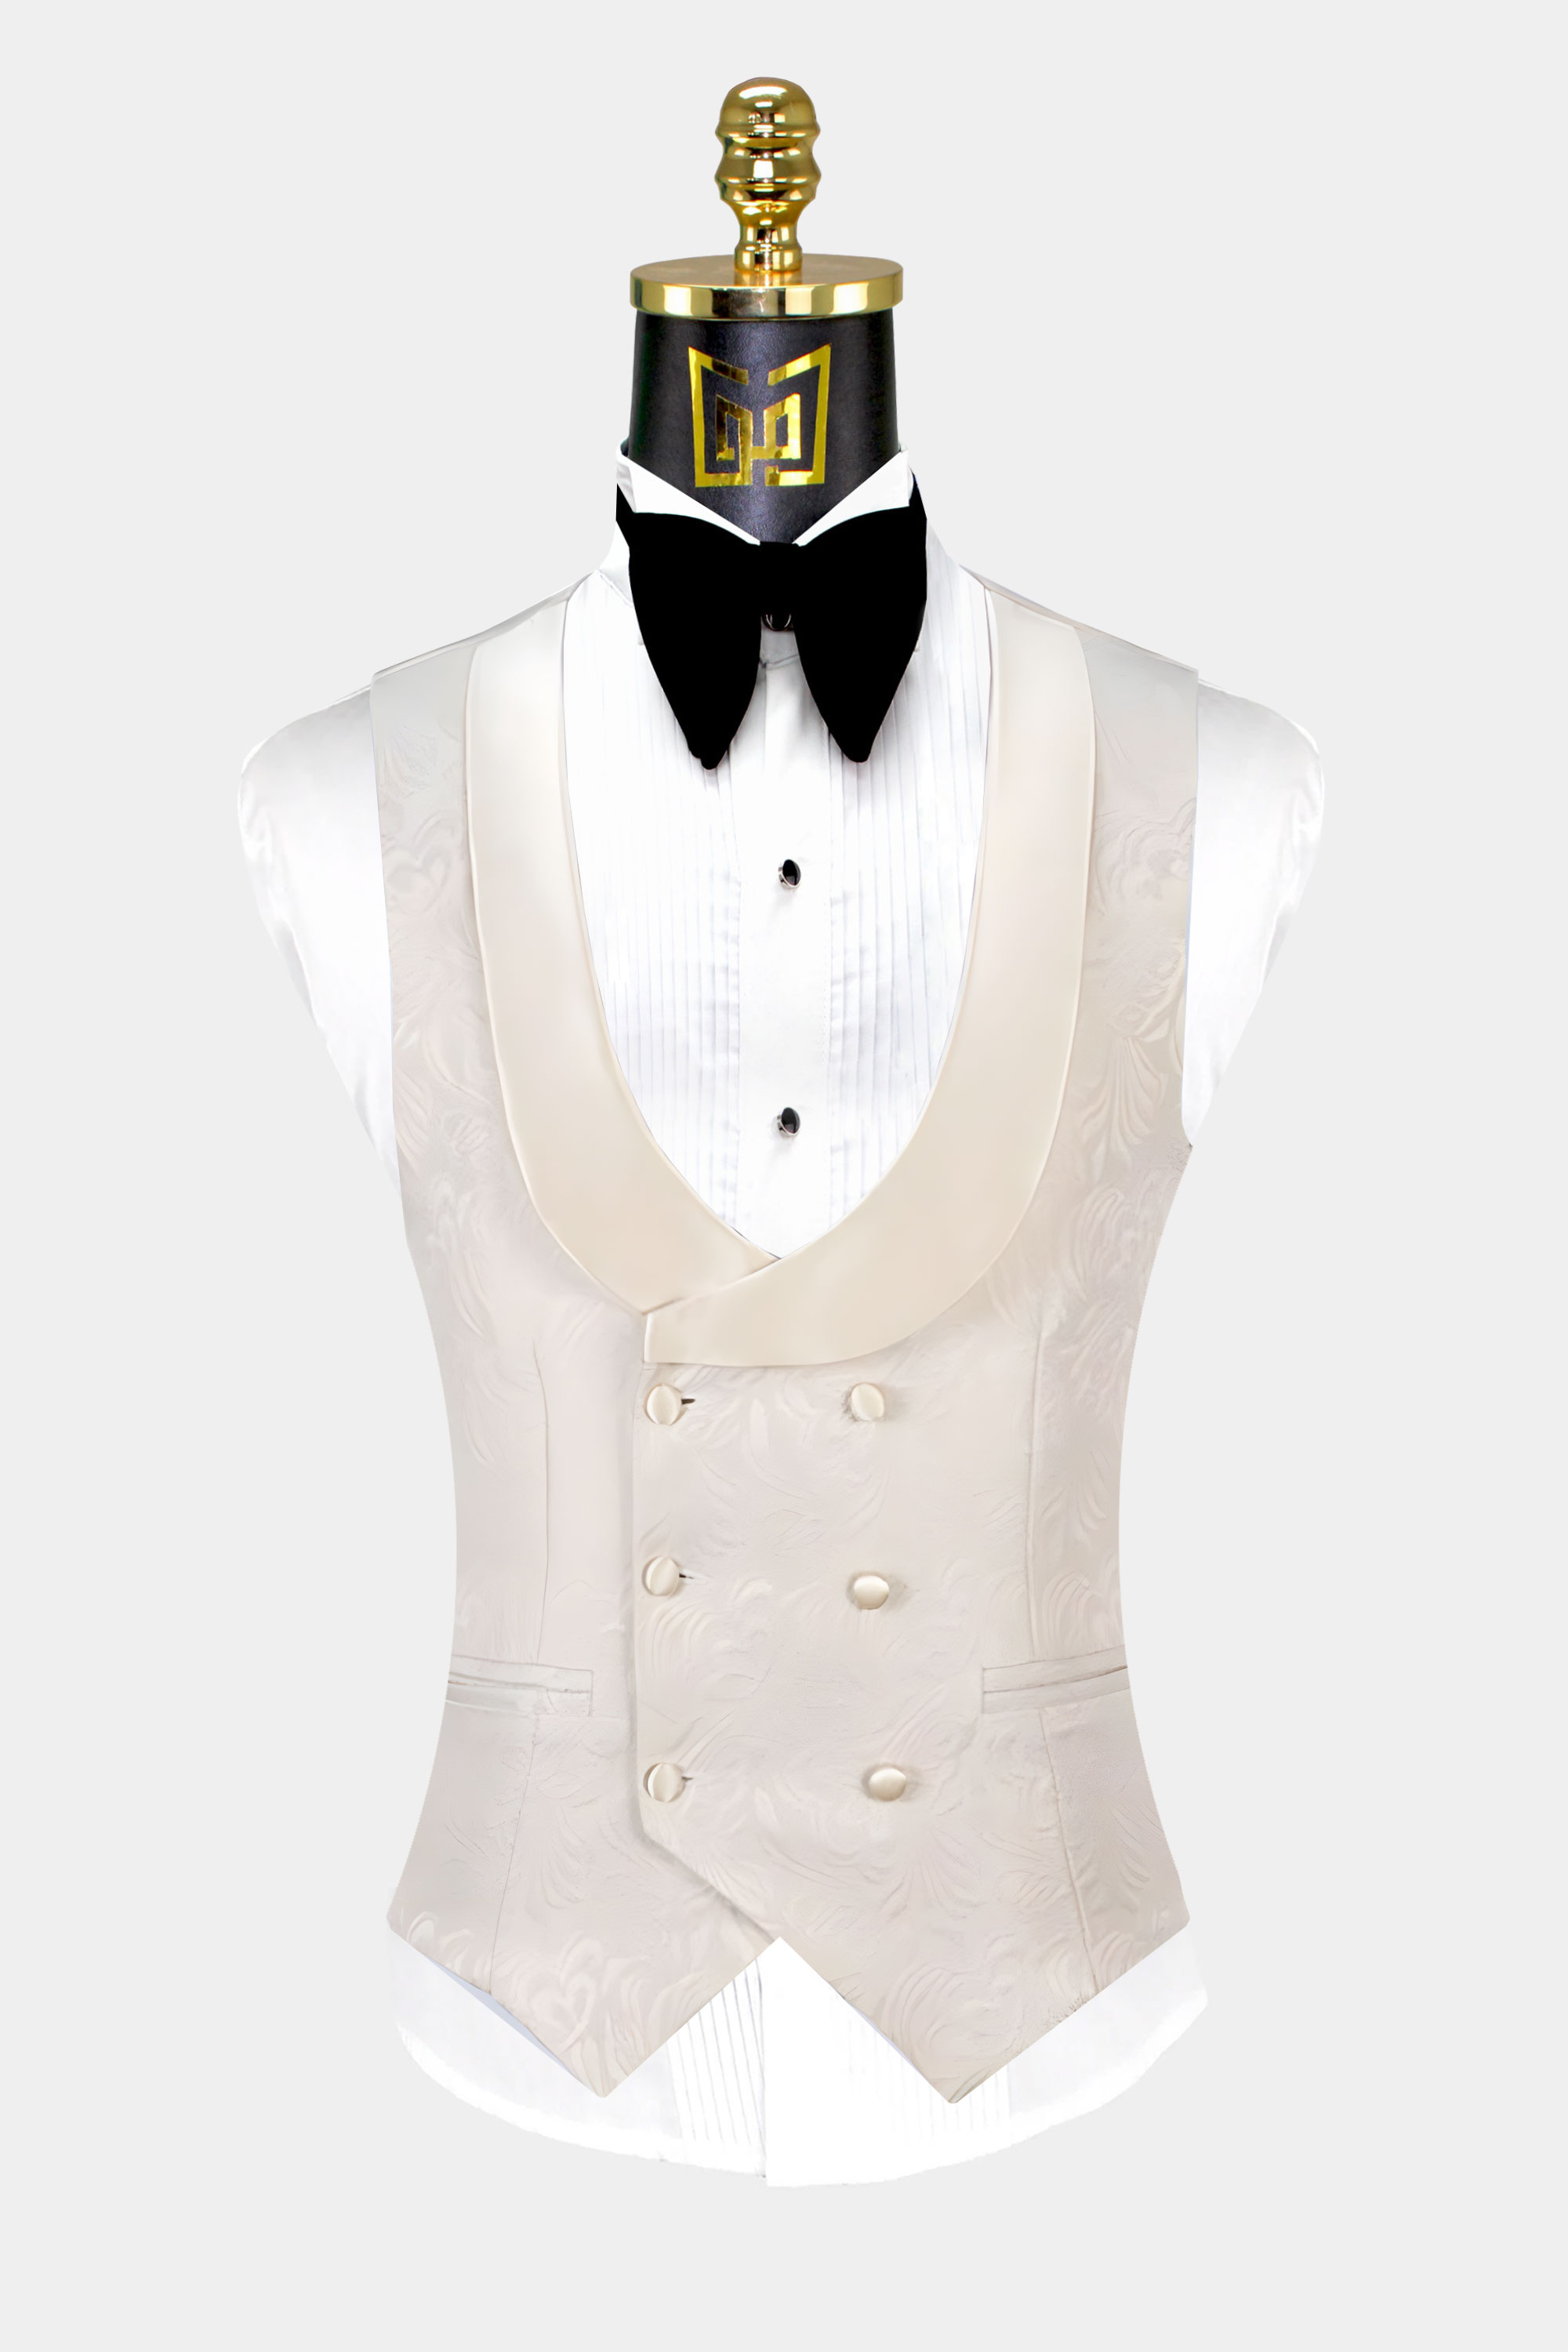 All-Champagne-Tuxedo-Vest-Wedding-WAistcoat-from-Gentlemansguru.com